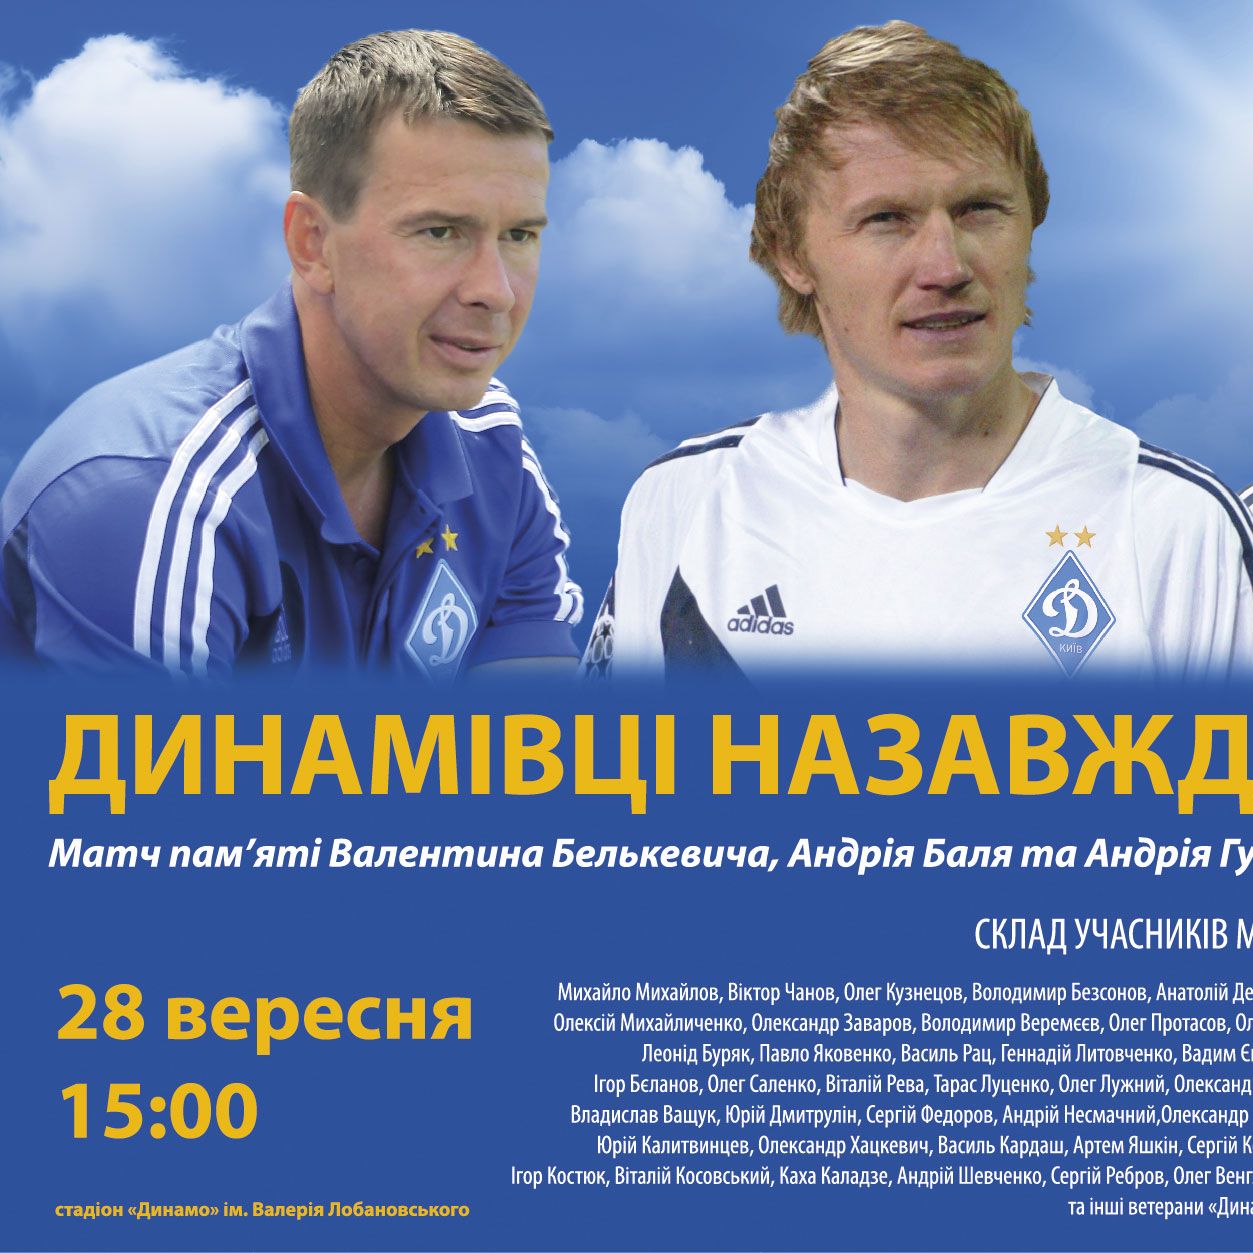 Andriy BAL, Valentyn BELKEVYCH and Andriy HUSIN memorial match